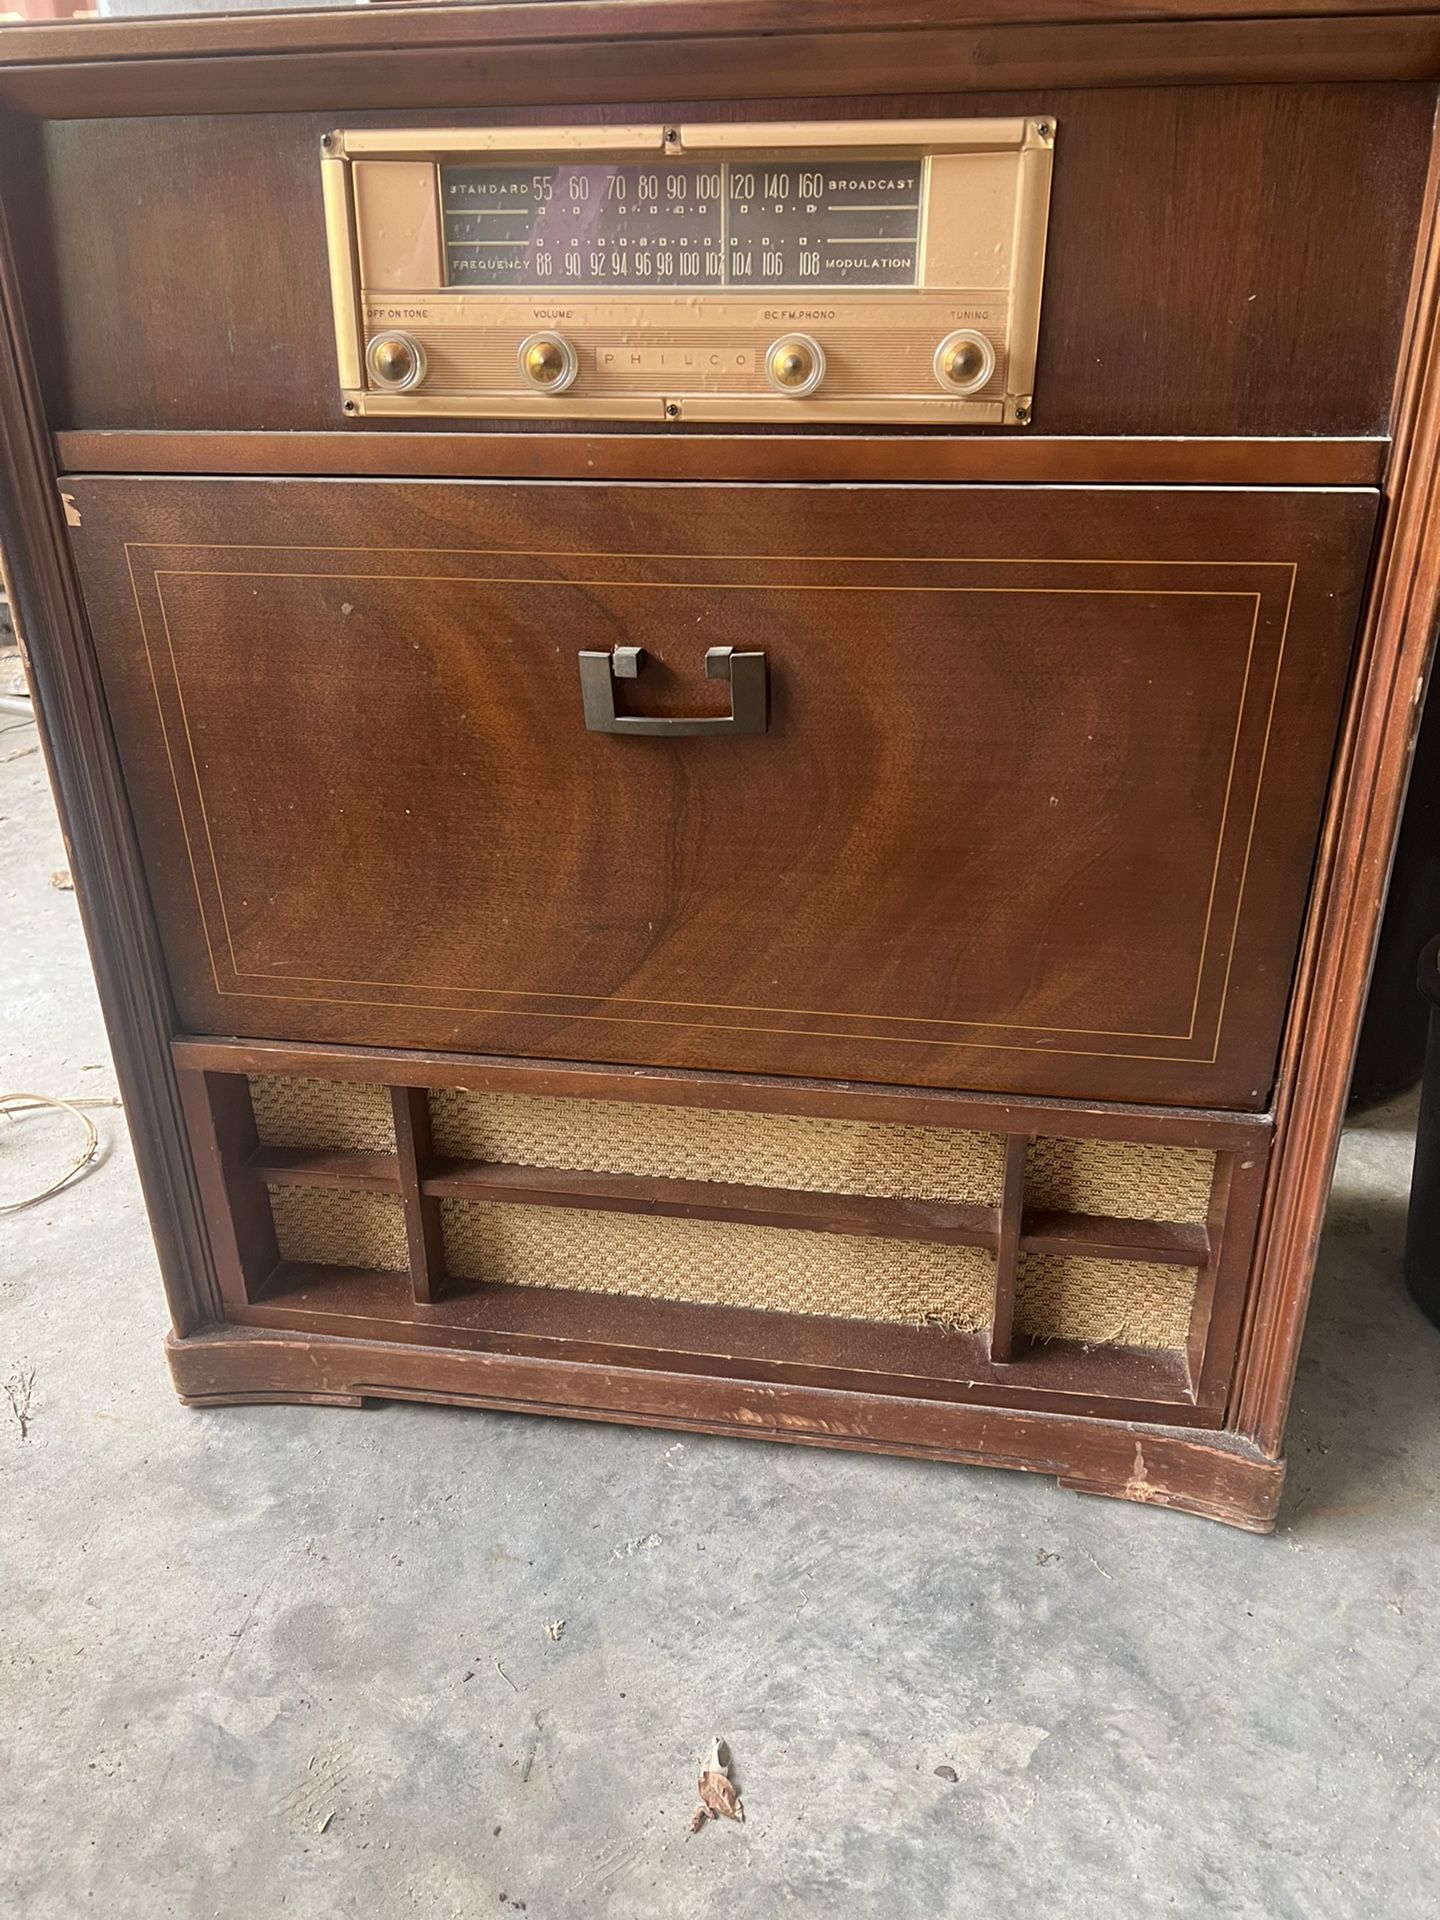 Antique Working Radio 